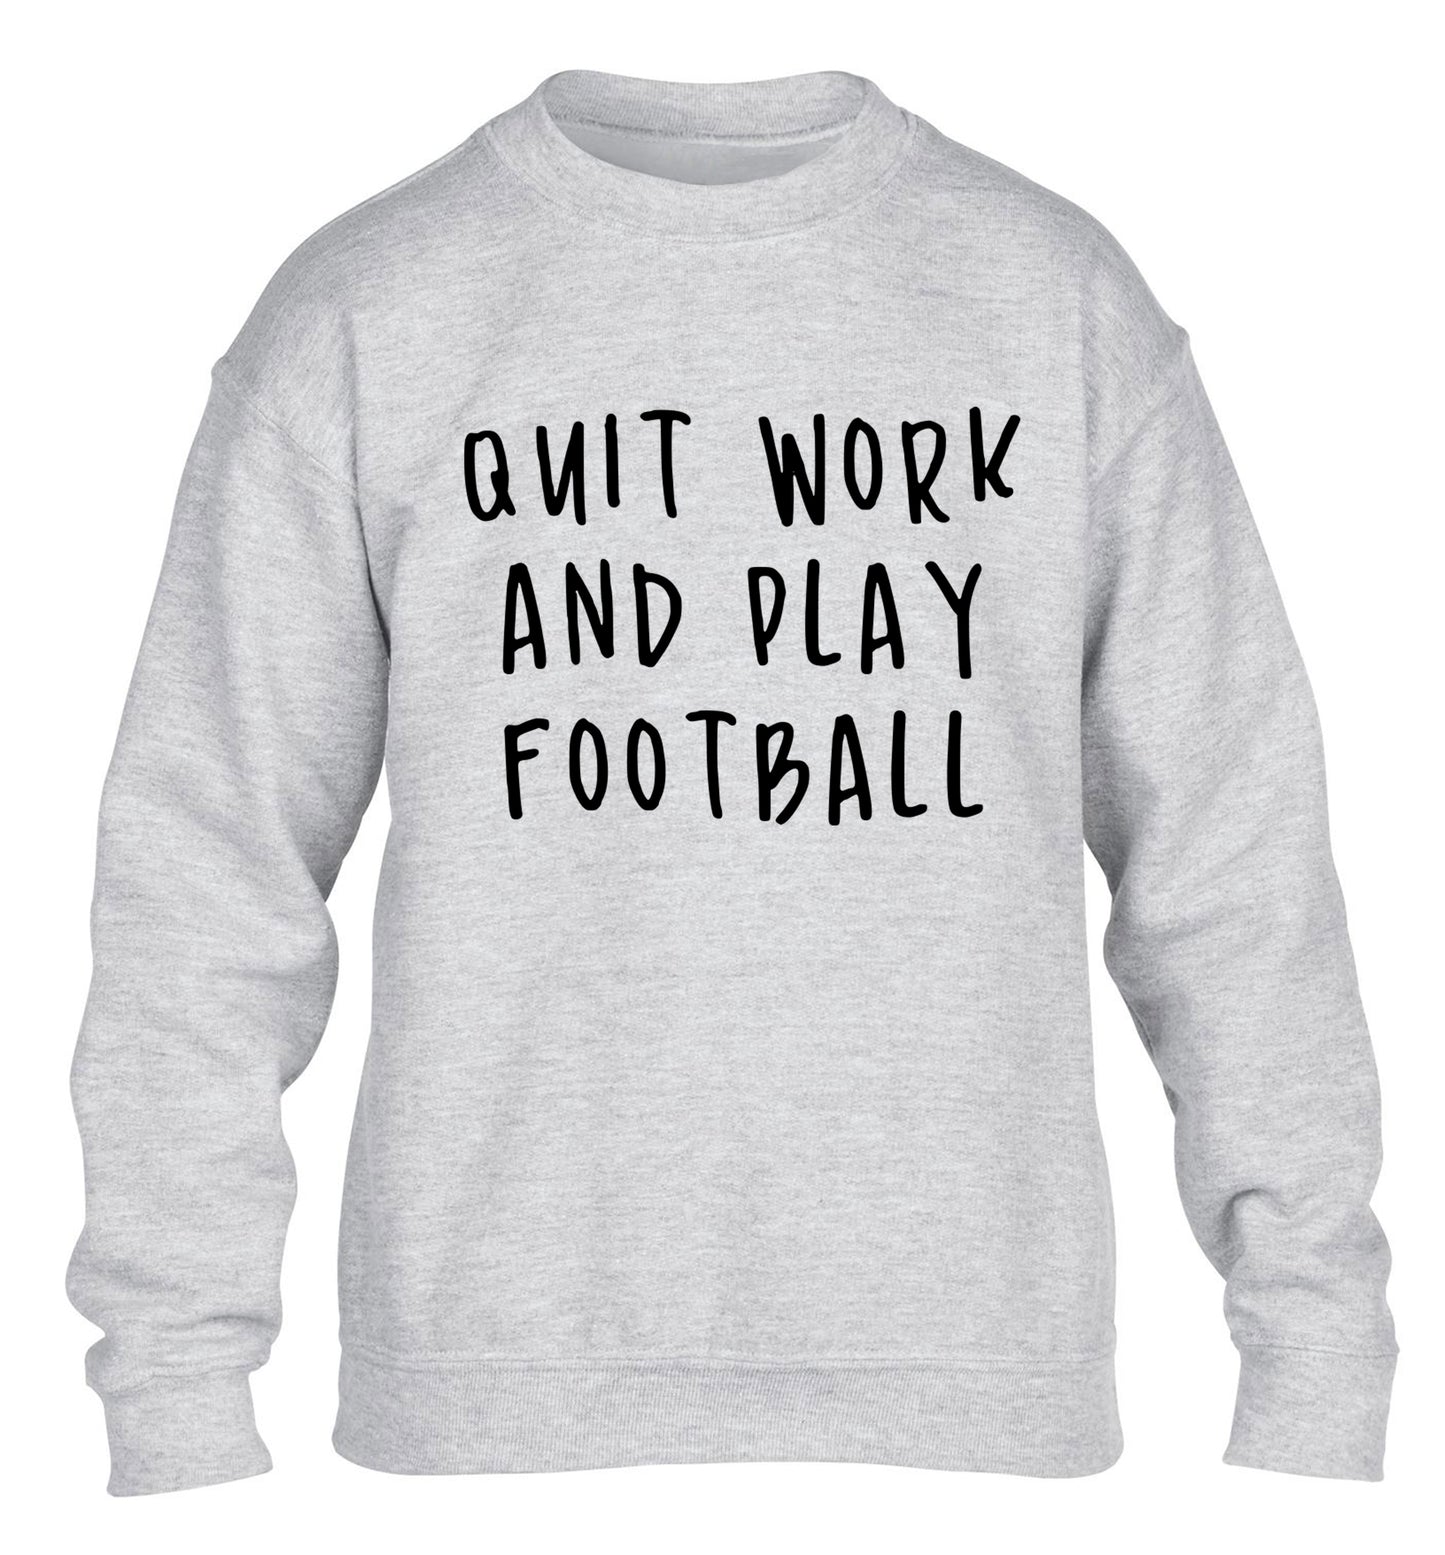 Quit work play football children's grey sweater 12-14 Years